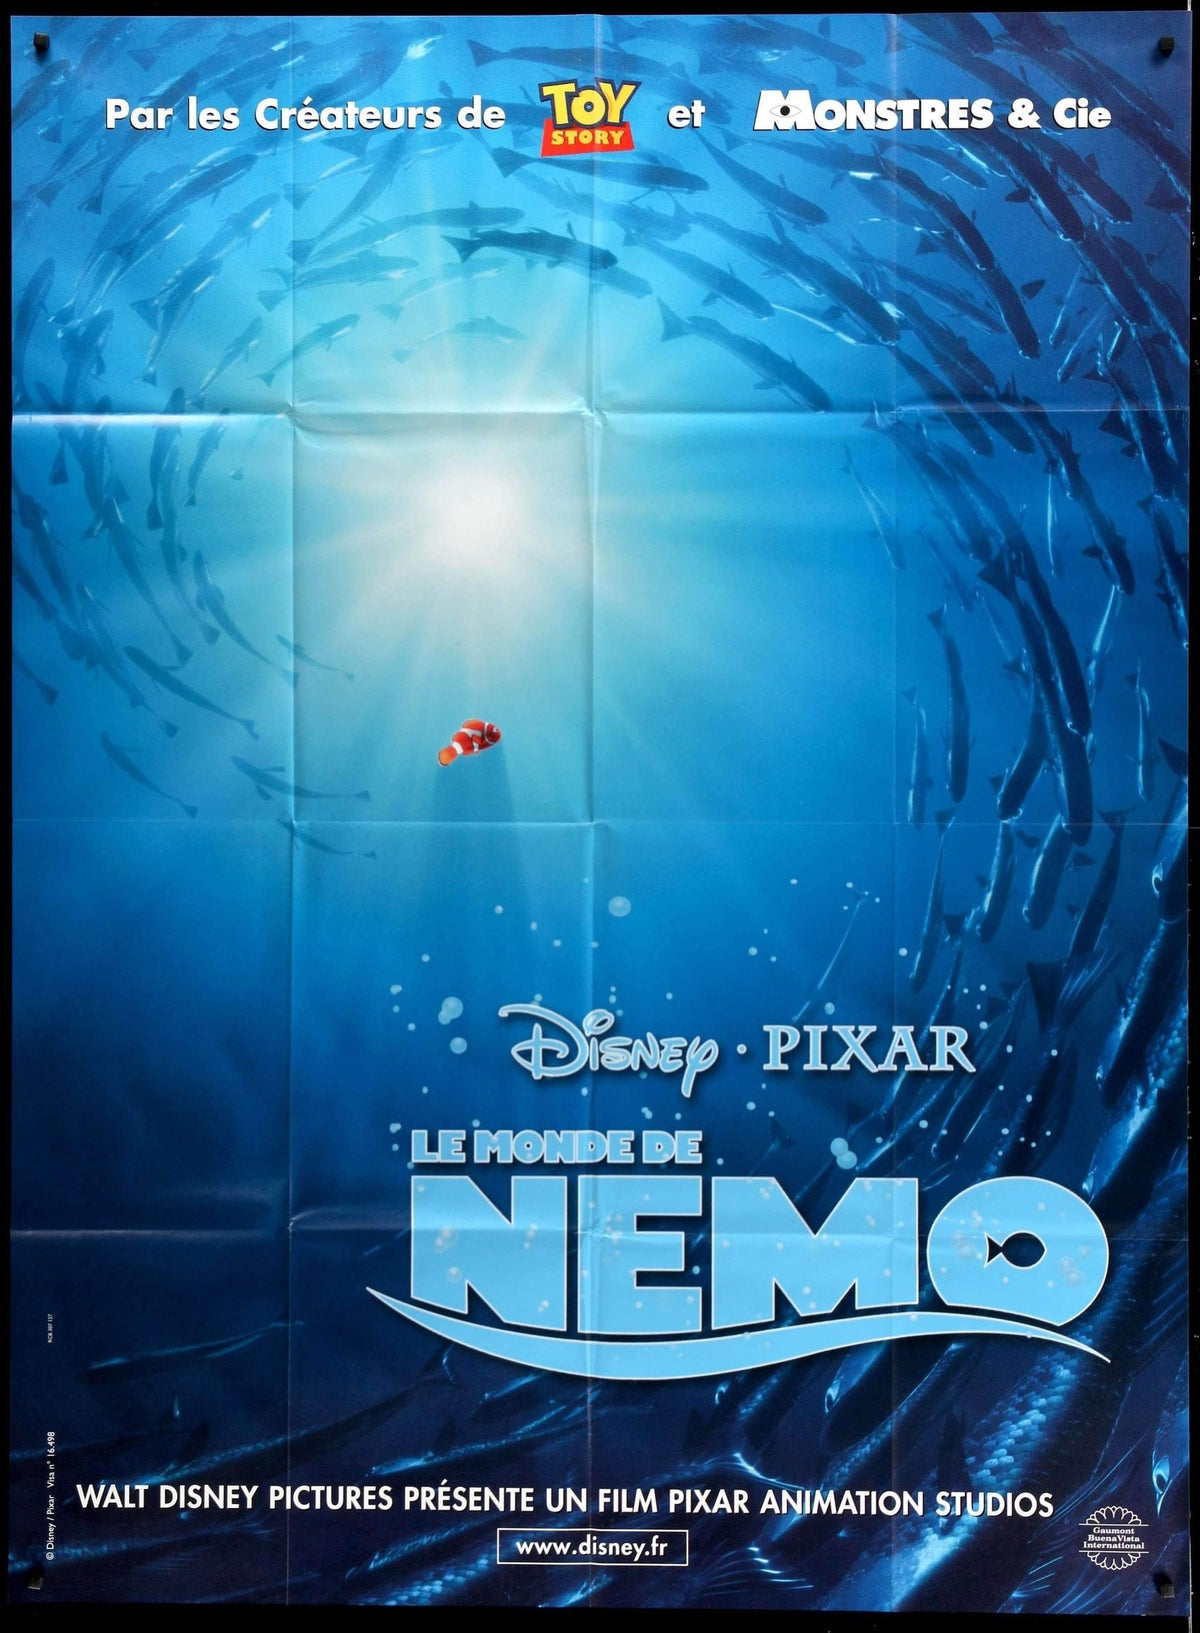 Finding Nemo (2003) original movie poster for sale at Original Film Art